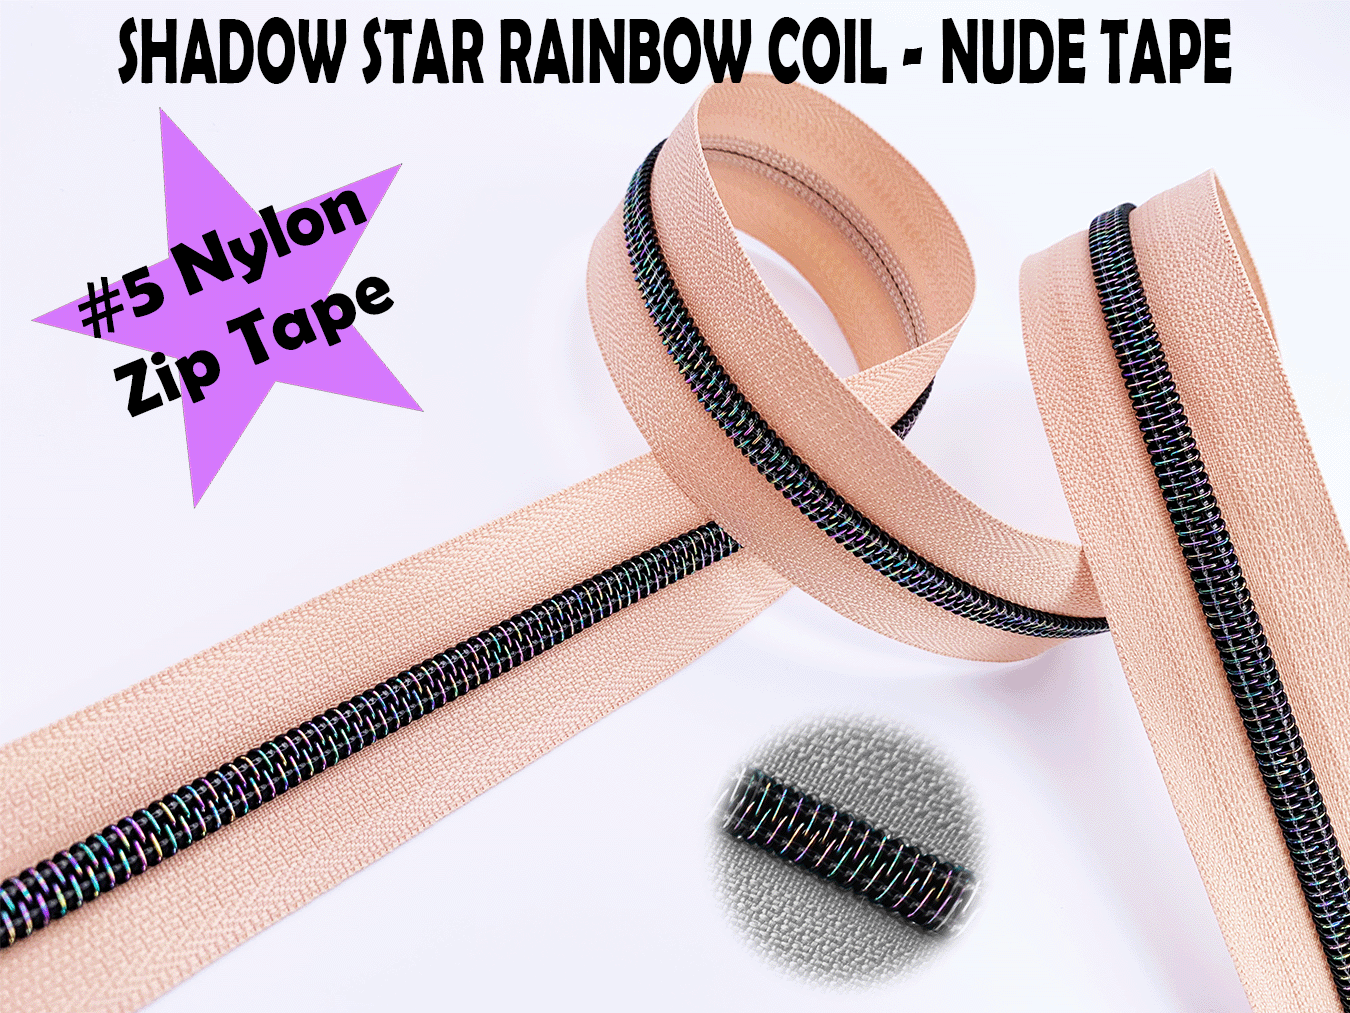 Nude Zipper Tape with Dark Iridescent Rainbow Teeth, Shadow Star Collection, for #5 nylon zips